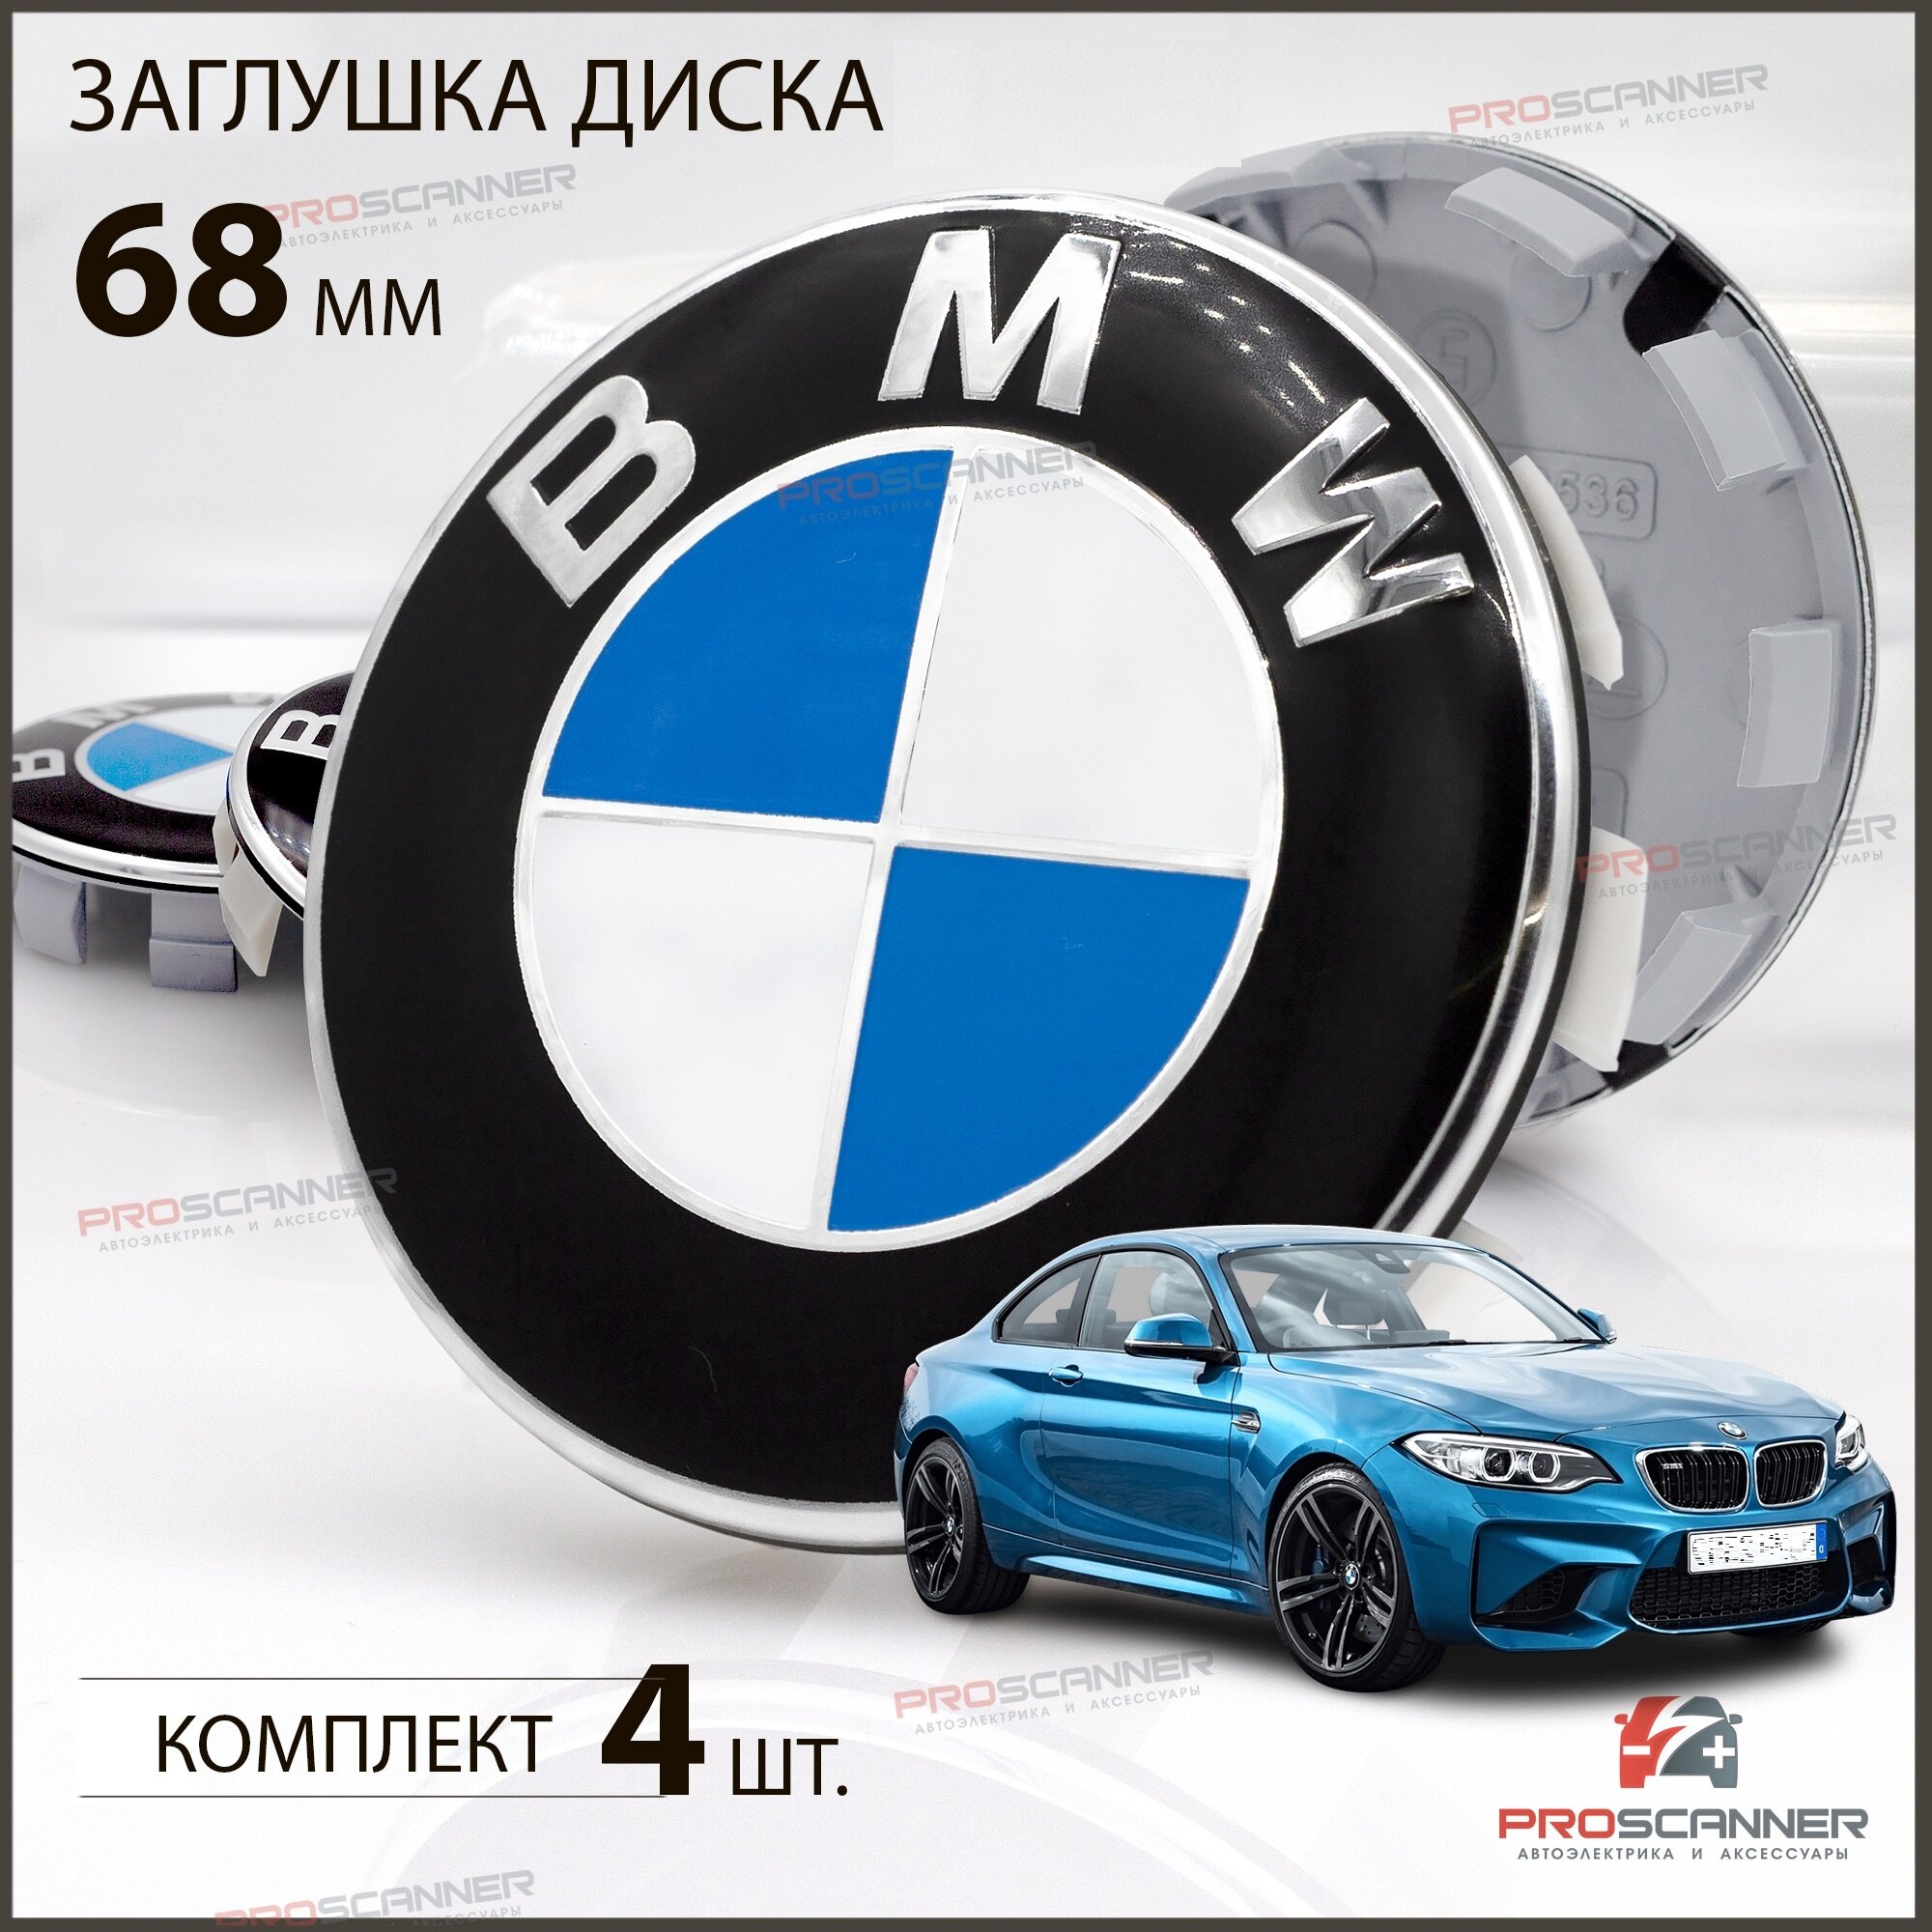 Колпачки заглушки на литые диски колес для BMW БМВ 68 мм 36136783536 - 4 штуки, сине-белый NEW